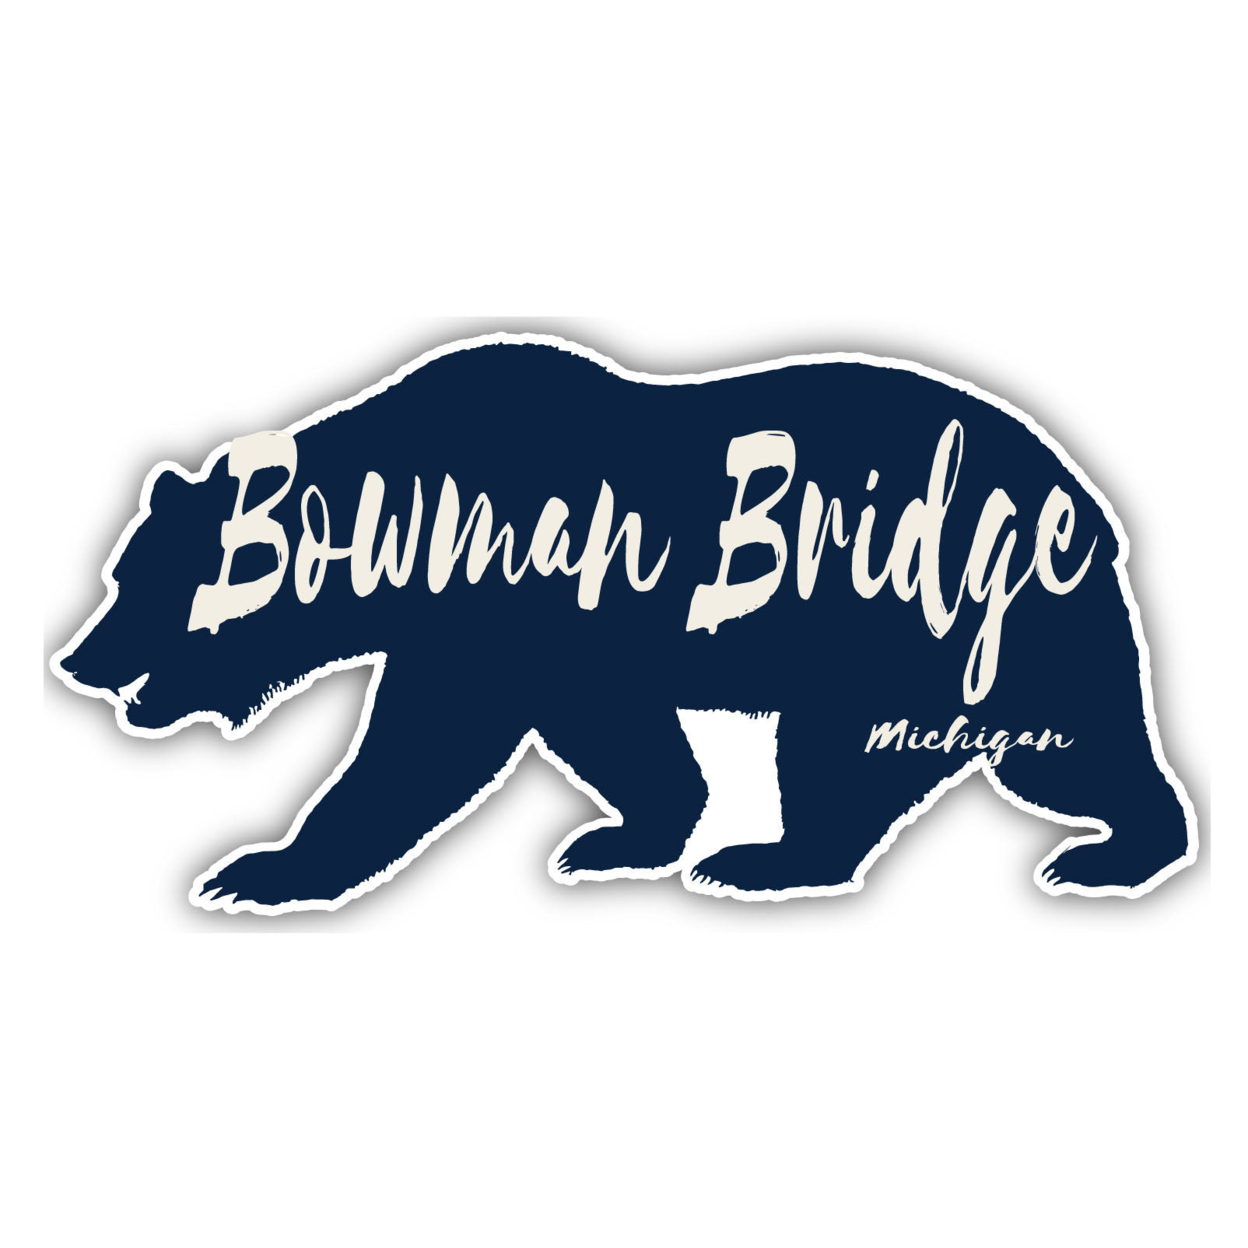 Bowman Bridge Michigan Souvenir Decorative Stickers (Choose Theme And Size) - 4-Pack, 4-Inch, Bear